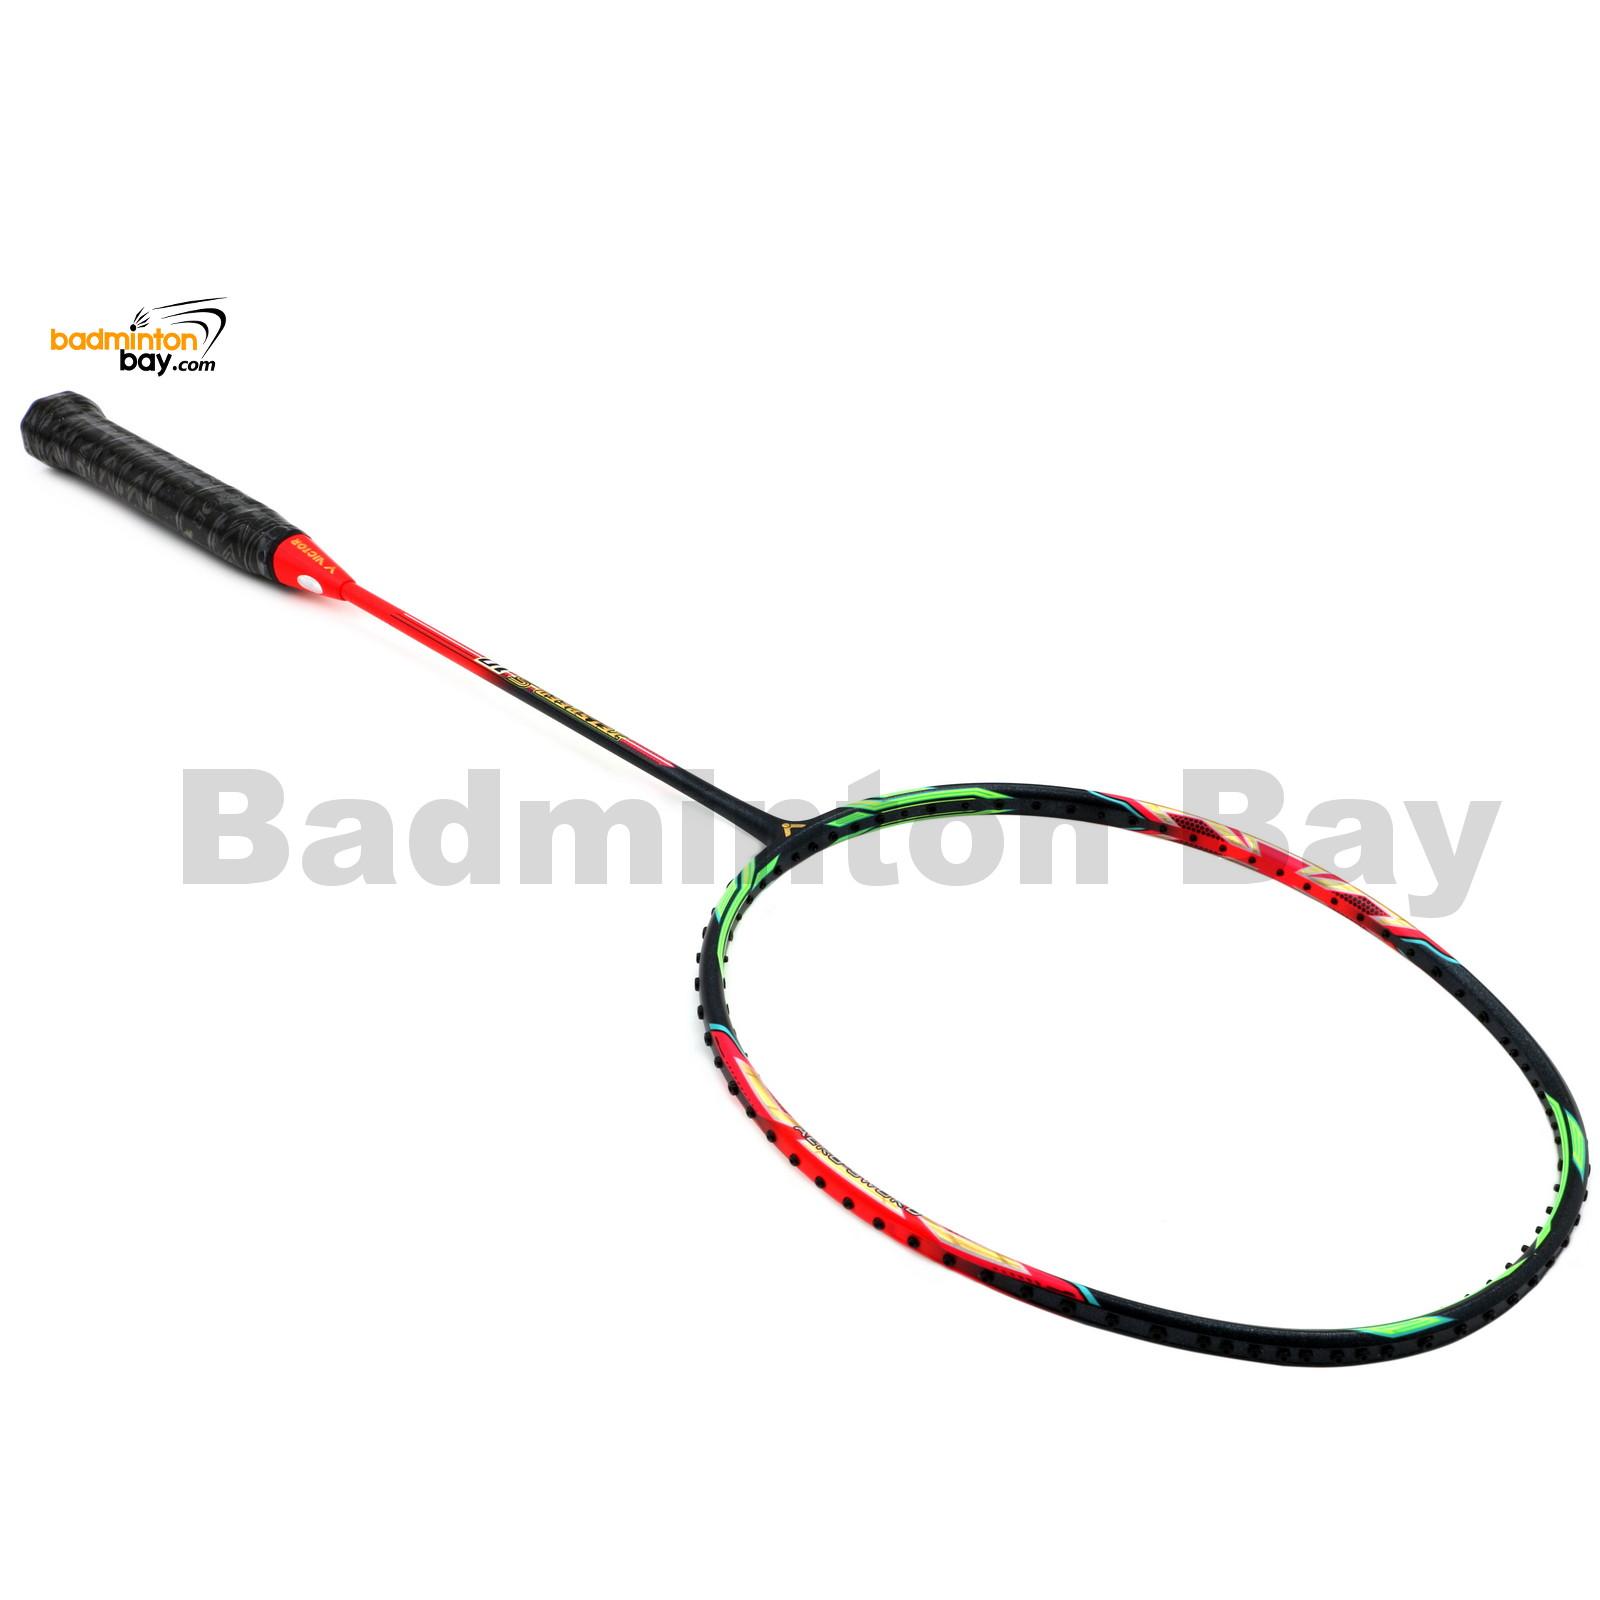 Victor badminton racket jetspeed s10 red victor new badminton racket 4U 